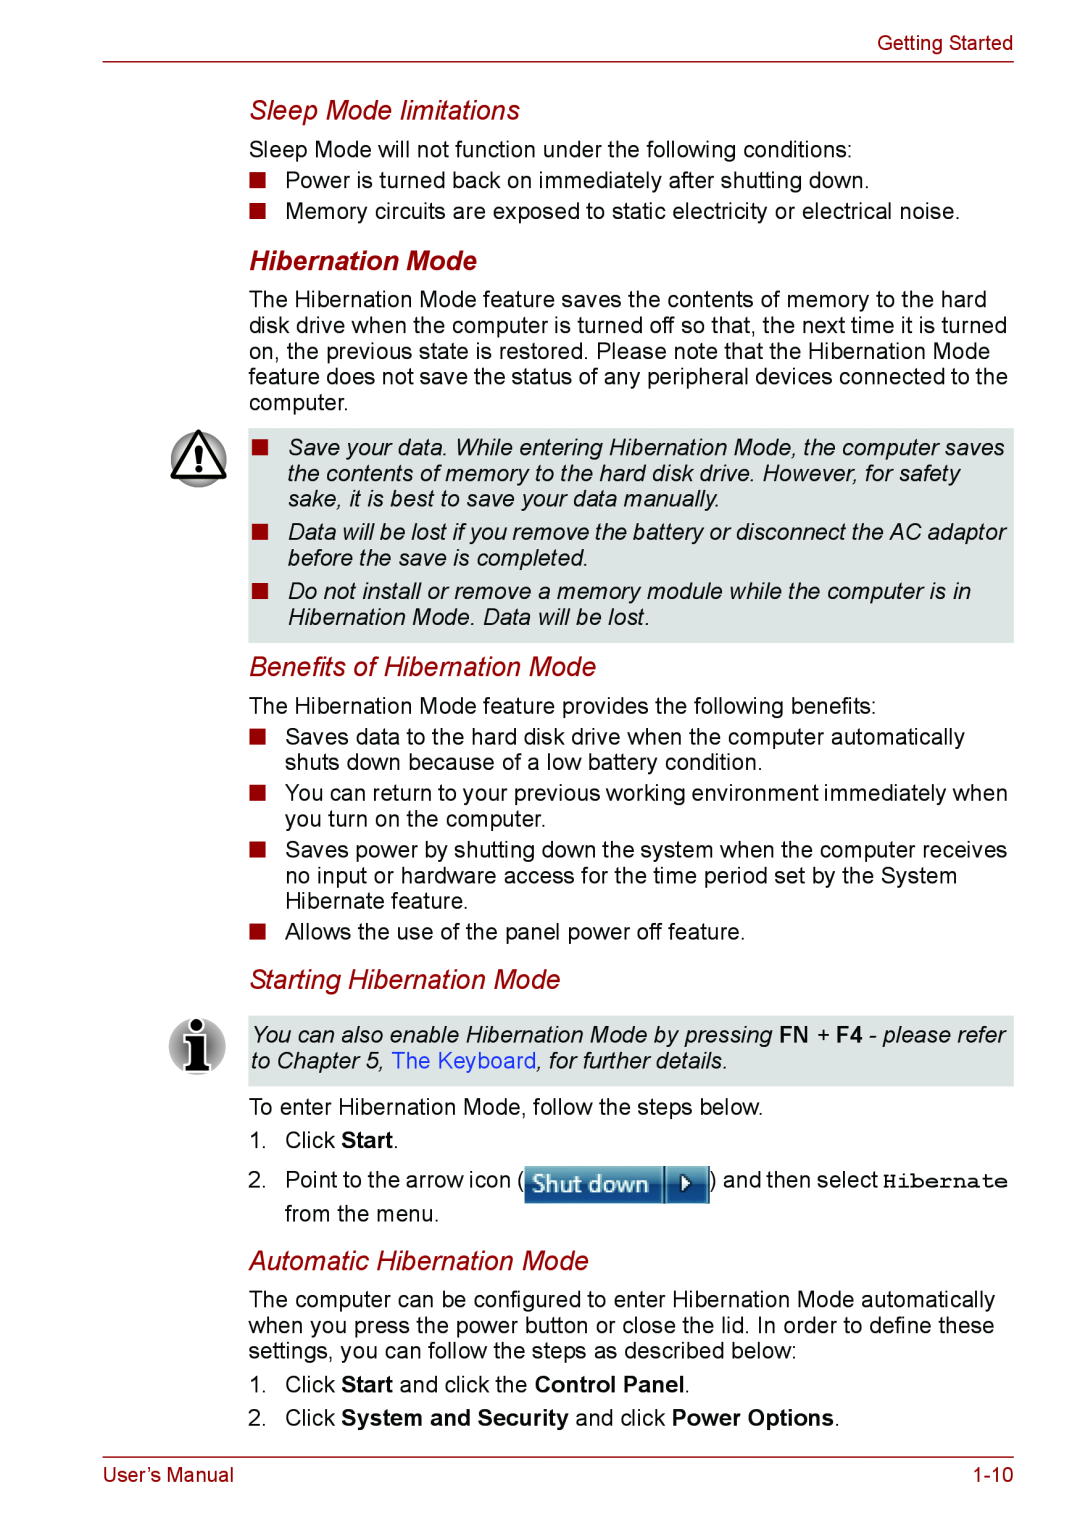 Toshiba PSC08U-02D01D user manual Sleep Mode limitations, Benefits of Hibernation Mode, Starting Hibernation Mode 